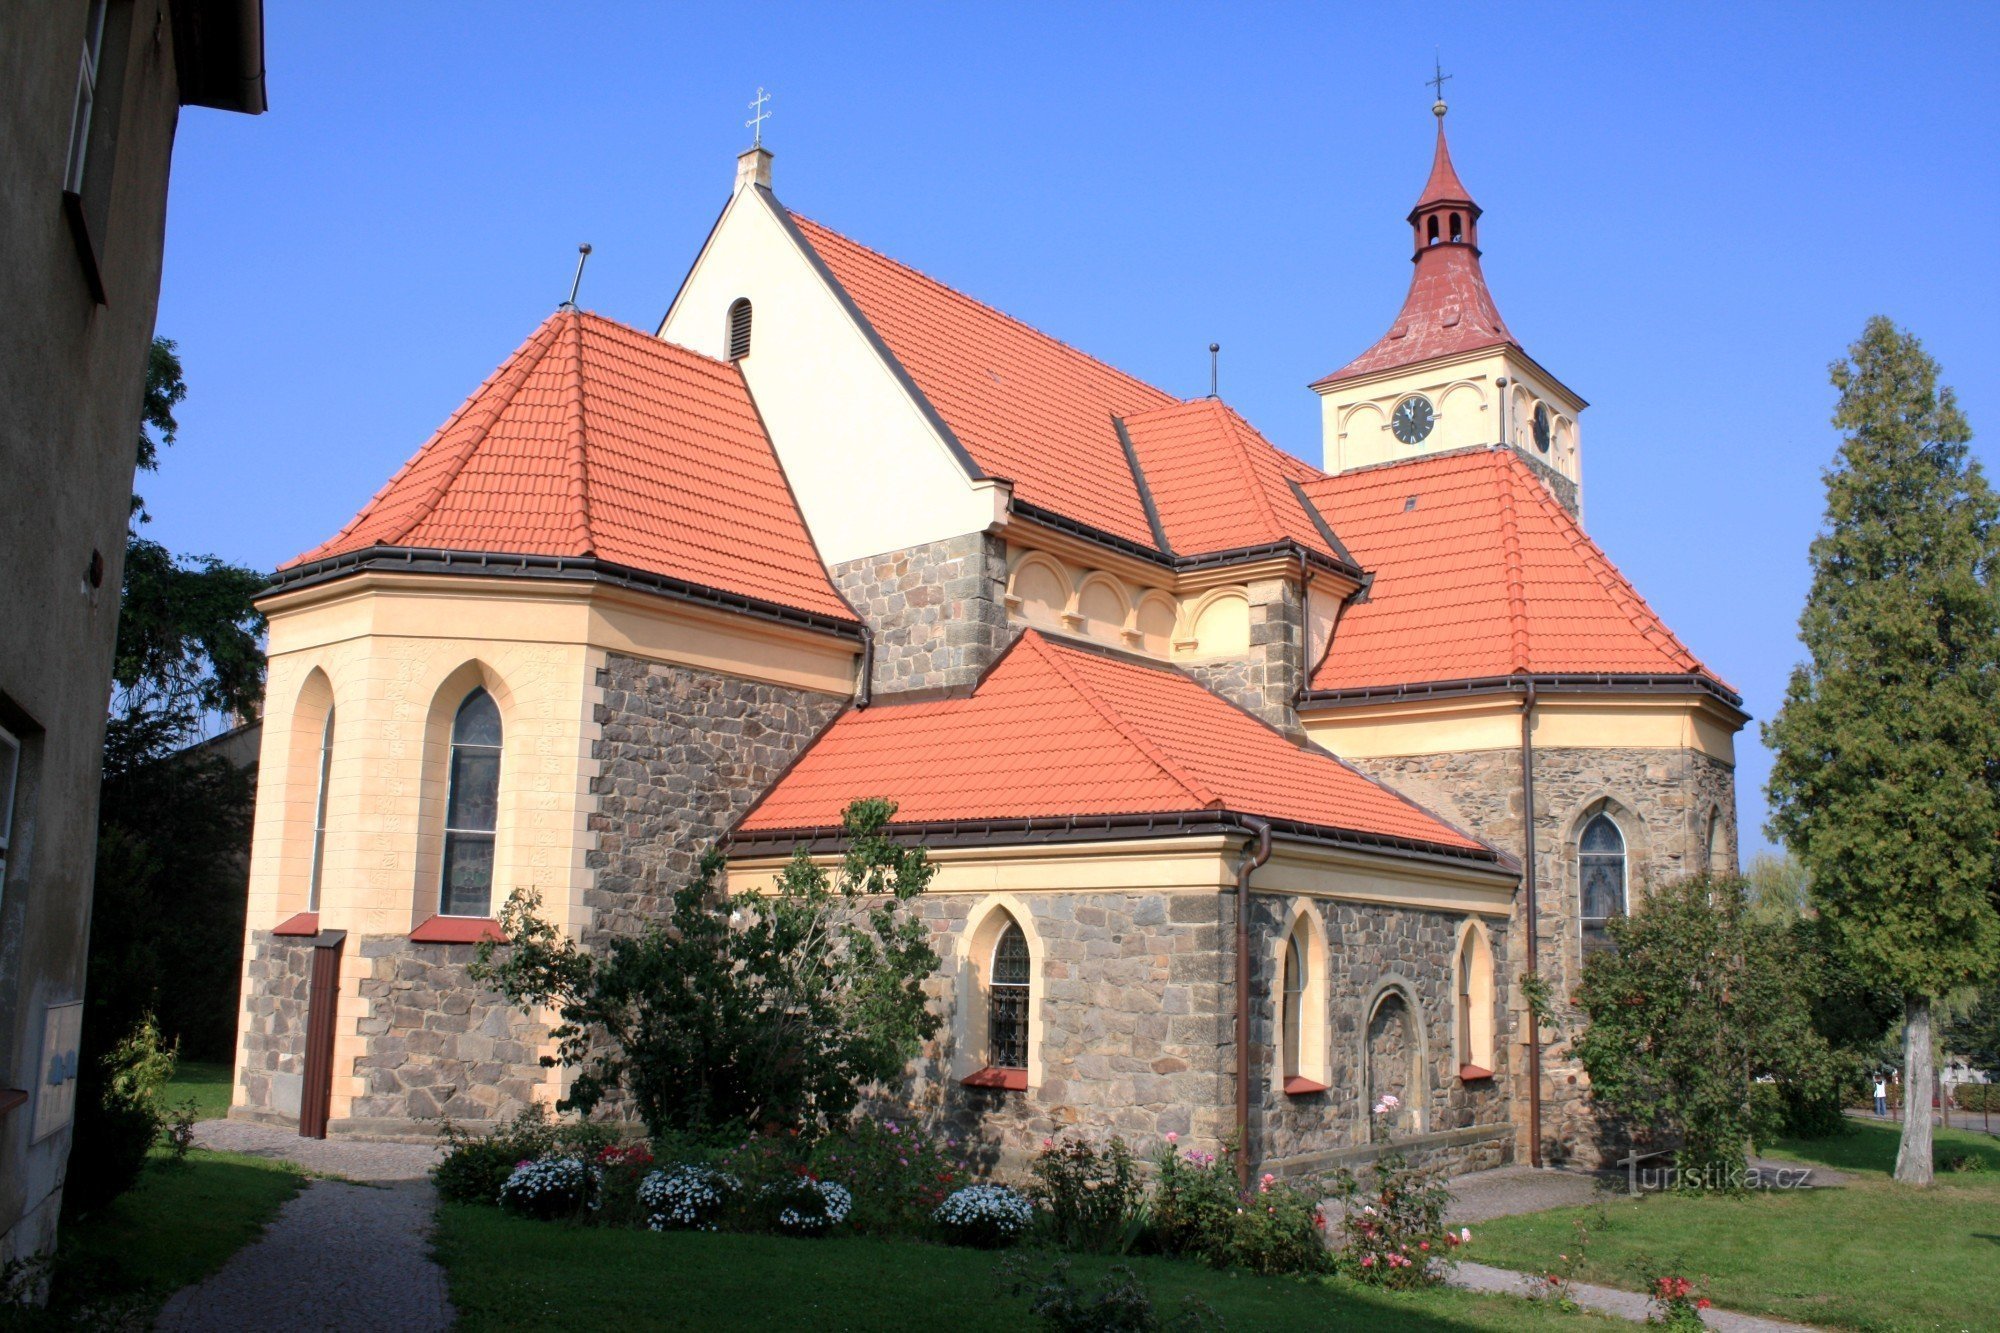 Proseč - Iglesia de St. Nicolás, obispo